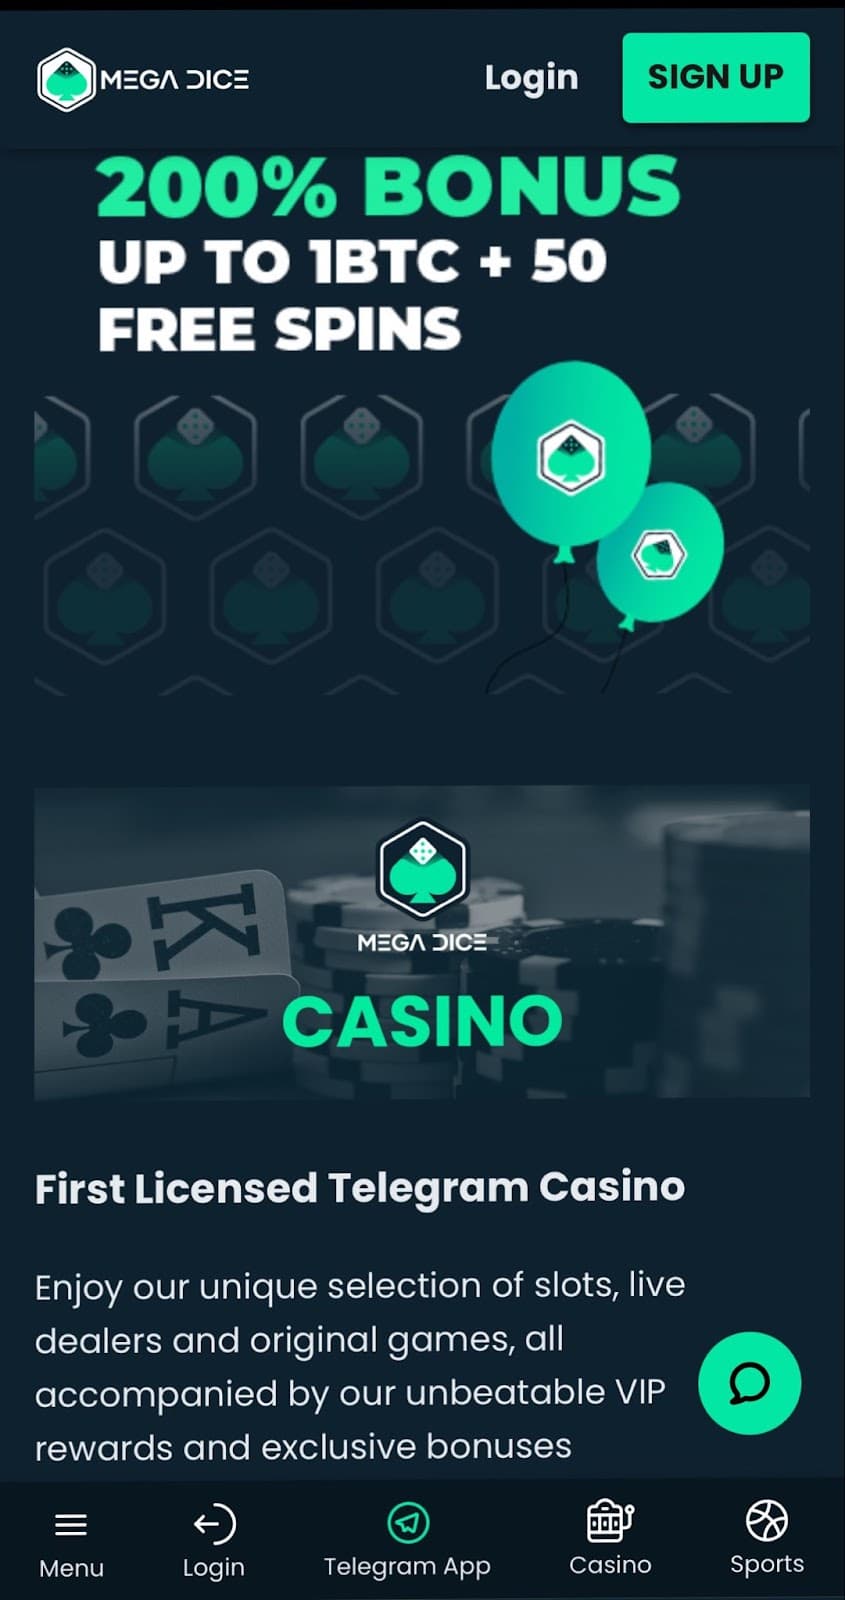 Lucky Legends Casino Has A Warning! - 200% Sign Up Bonus